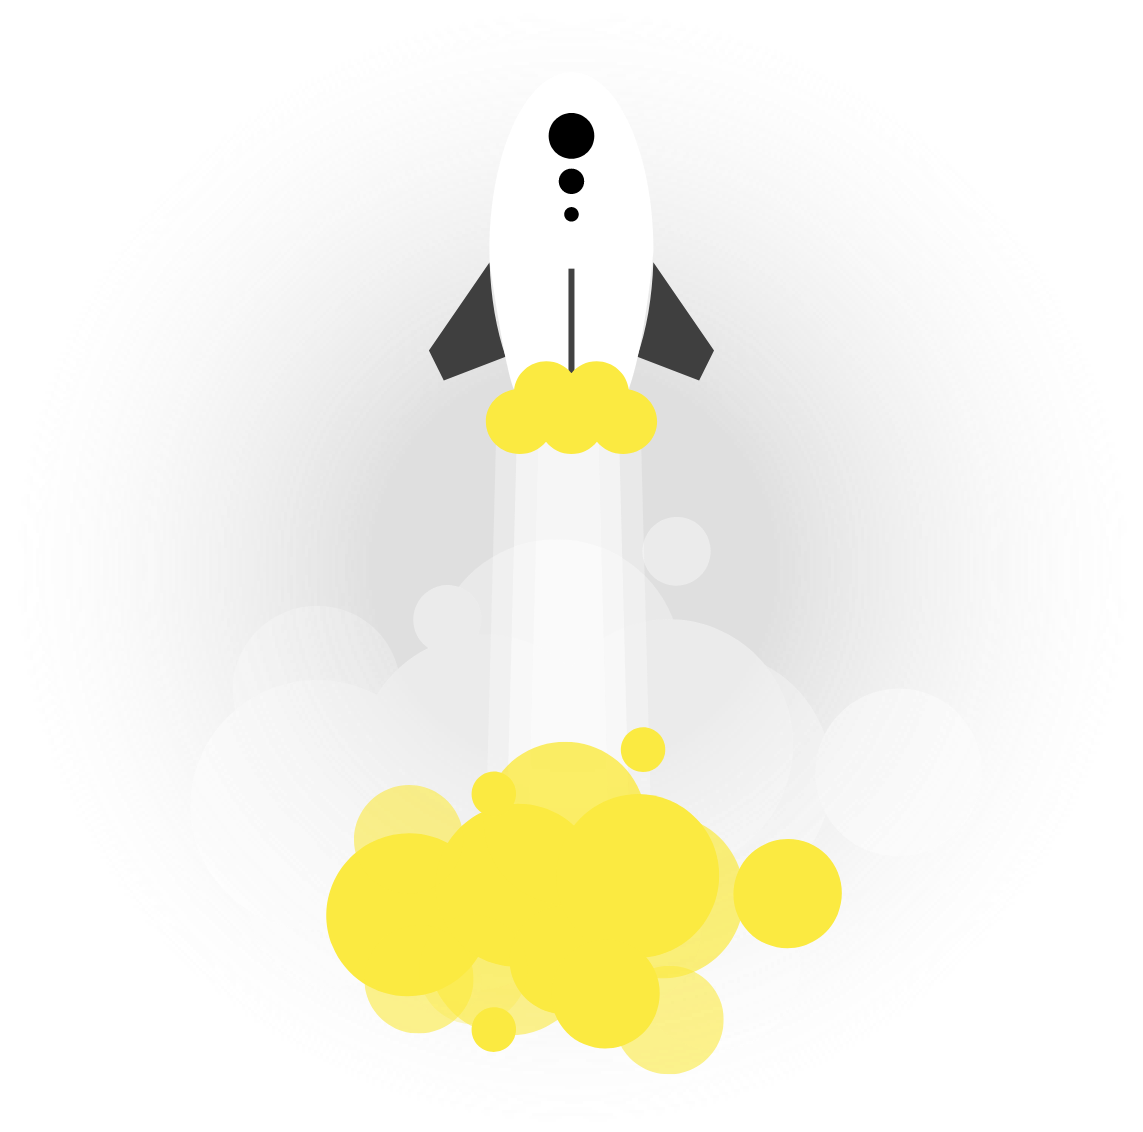 Rocket_launch_yellow